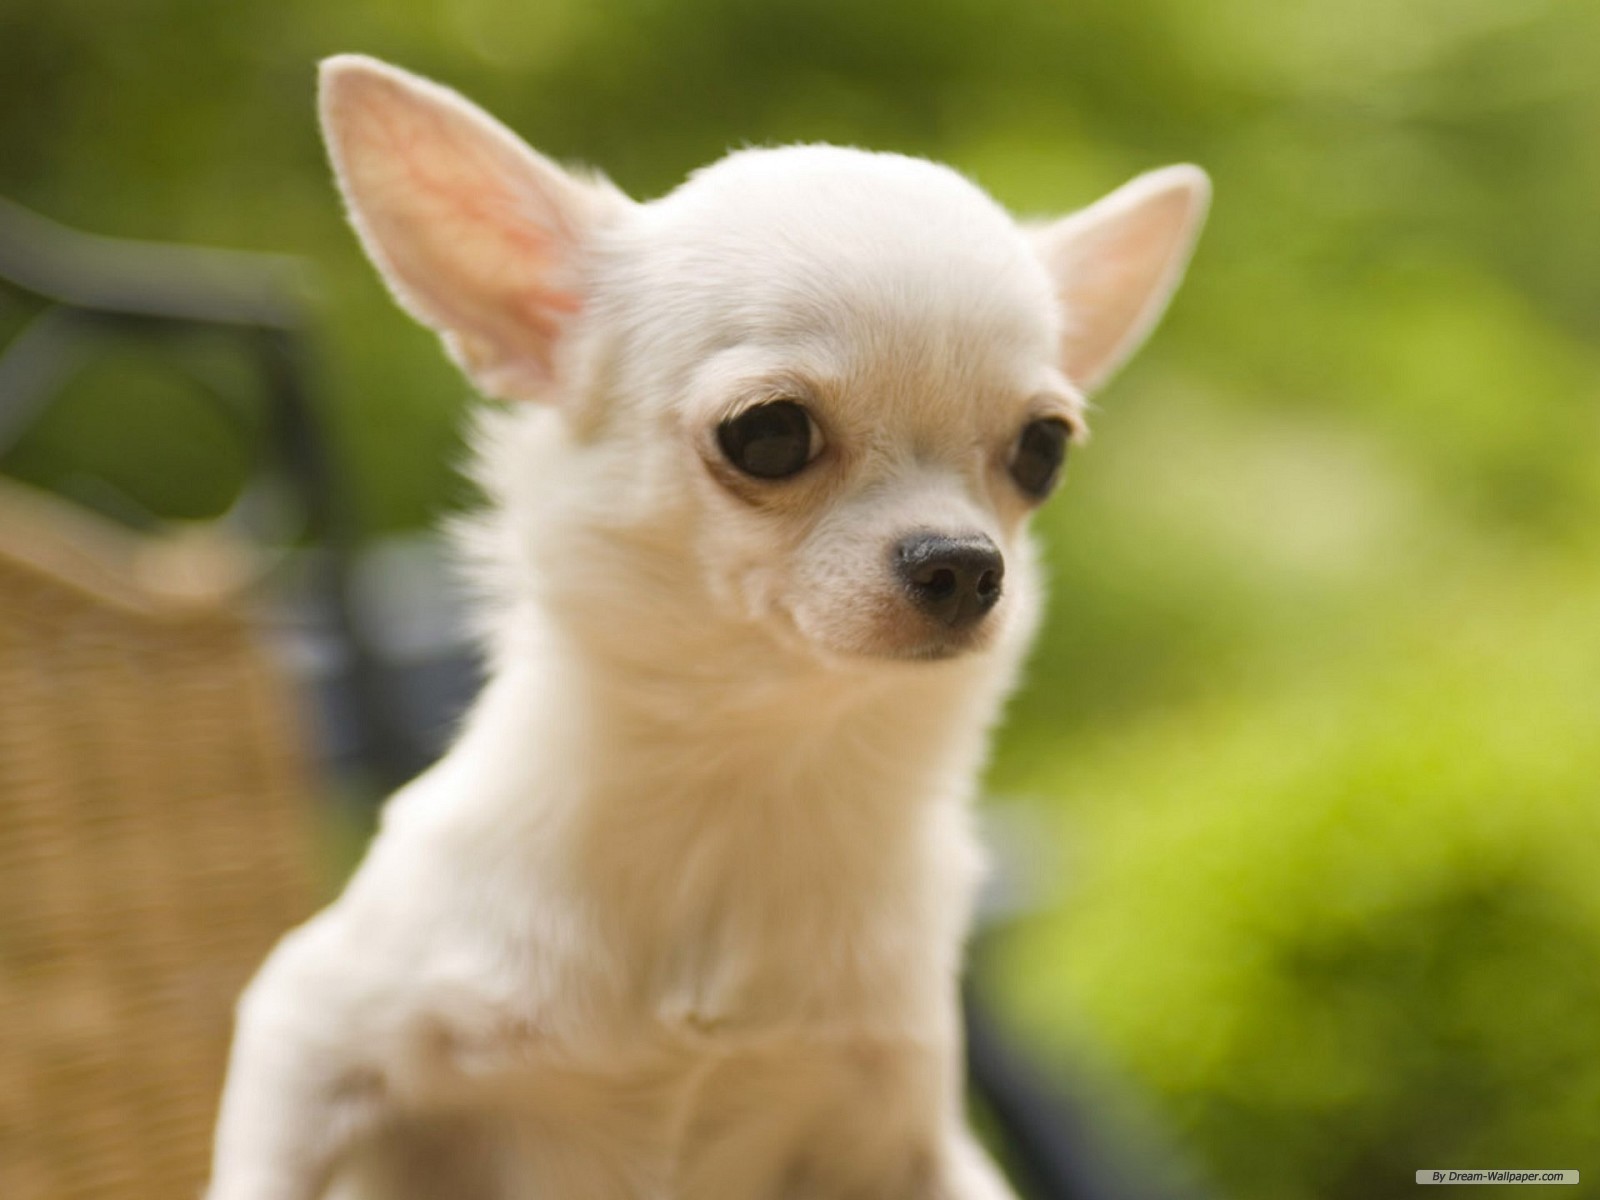 Wallpaper Animal Chihuahua